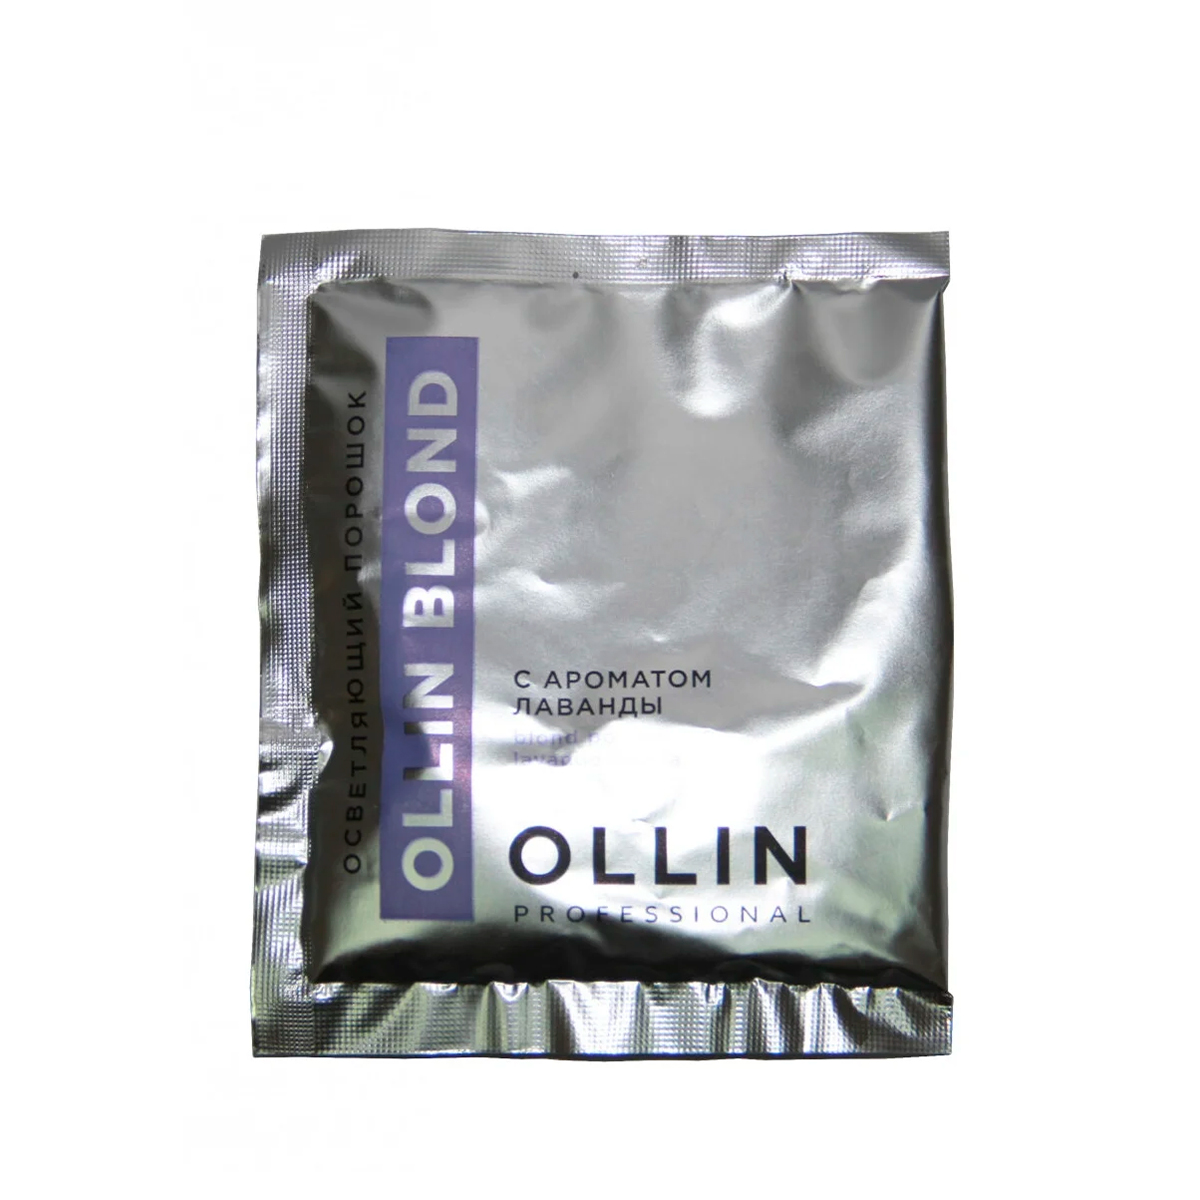 Ollin, Осветляющий порошок с ароматом лаванды Blond, 30 г. в саше осветляющий порошок зеленое яблоко ш9290 shte112h 500 г